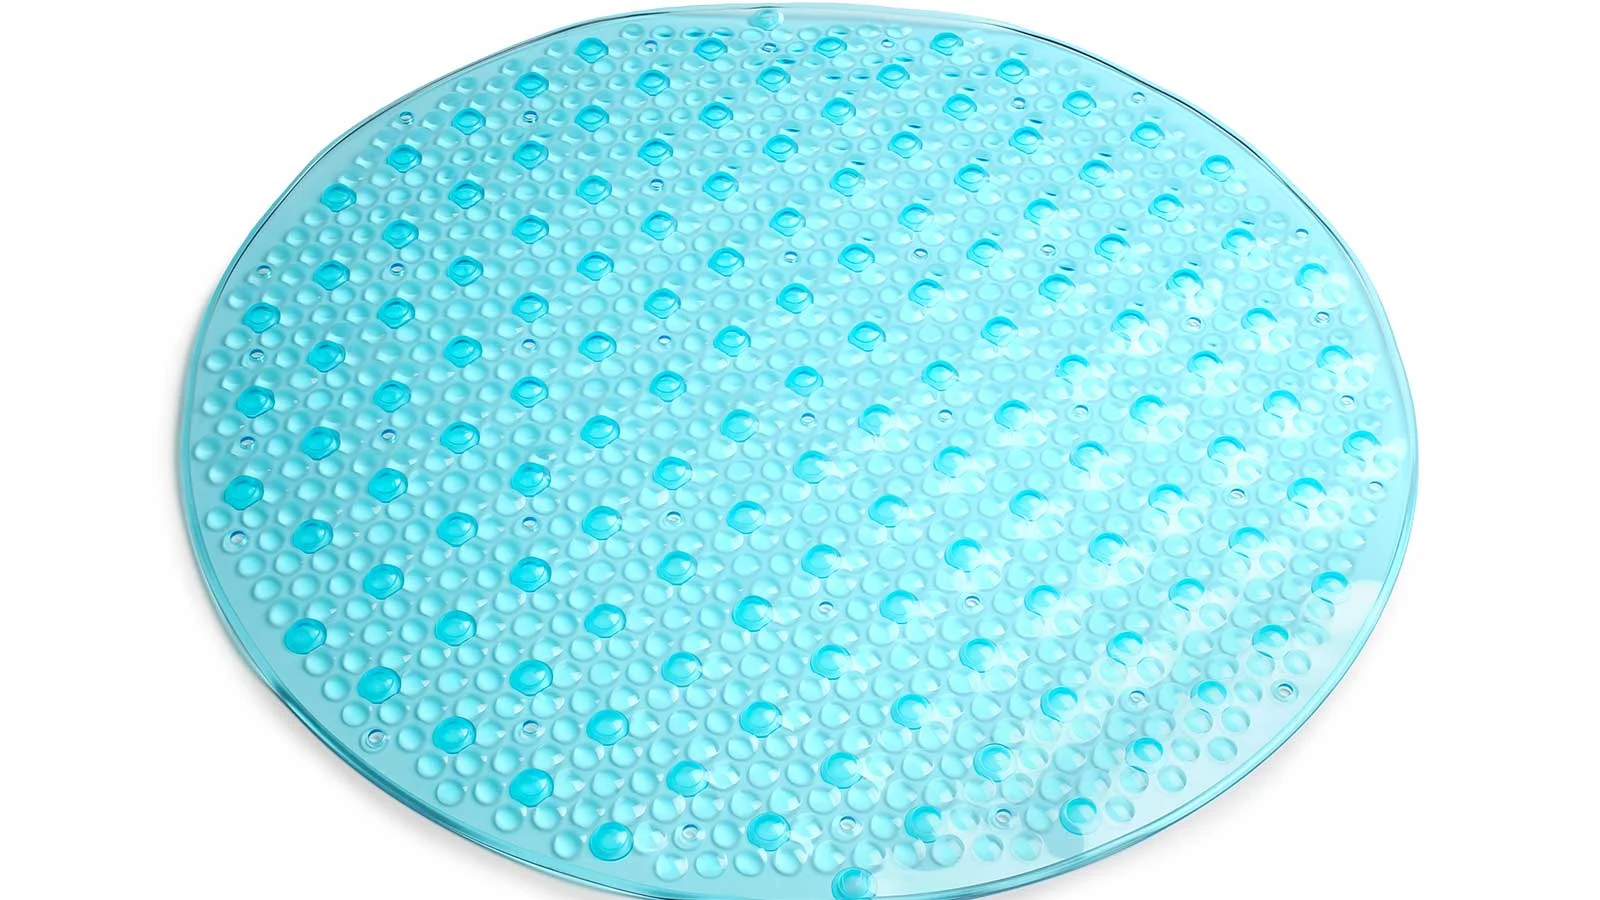 A blue scrubbing rubber